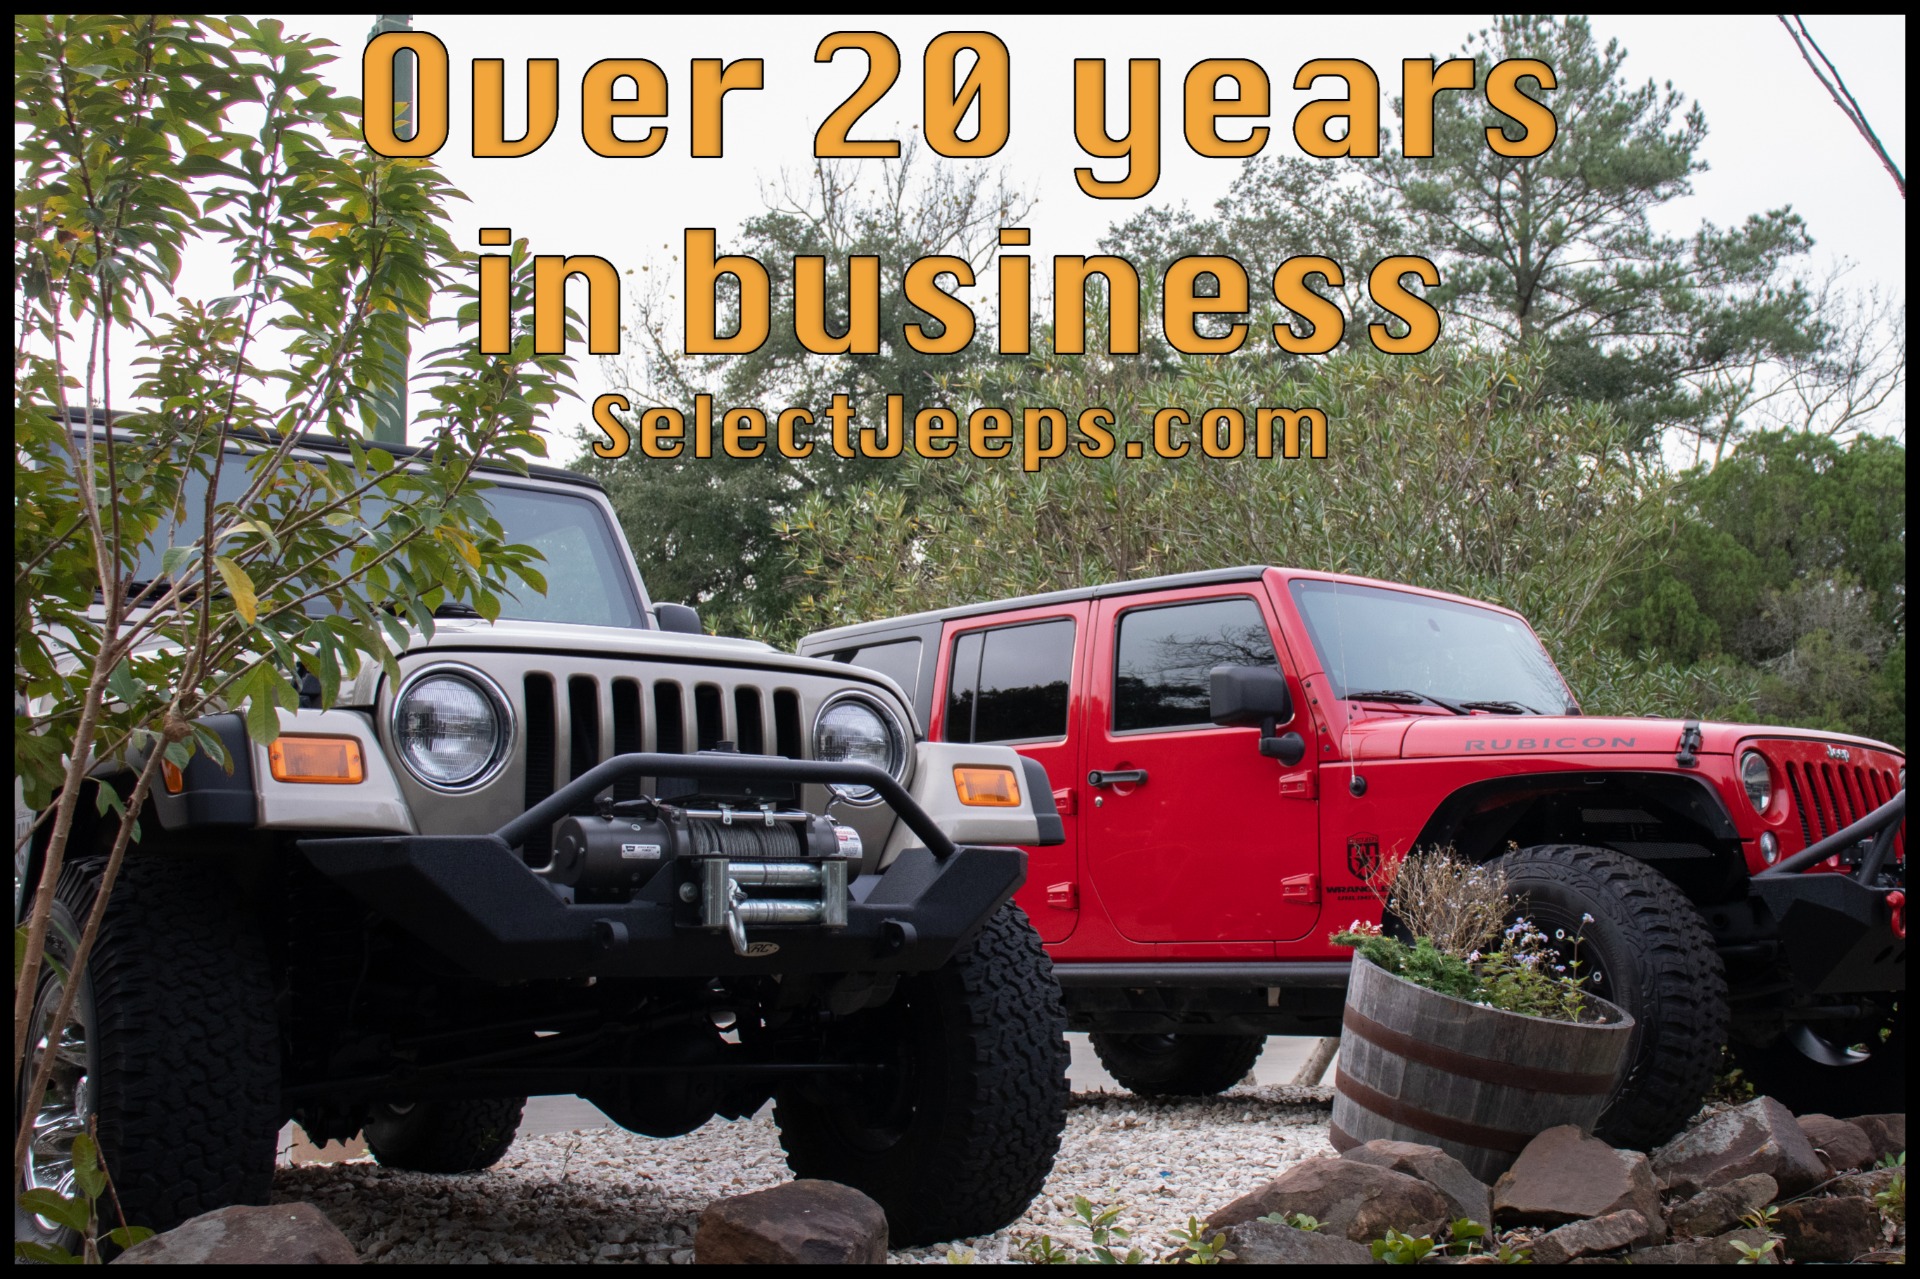 Used-2010-Jeep-Grand-Cherokee-Laredo